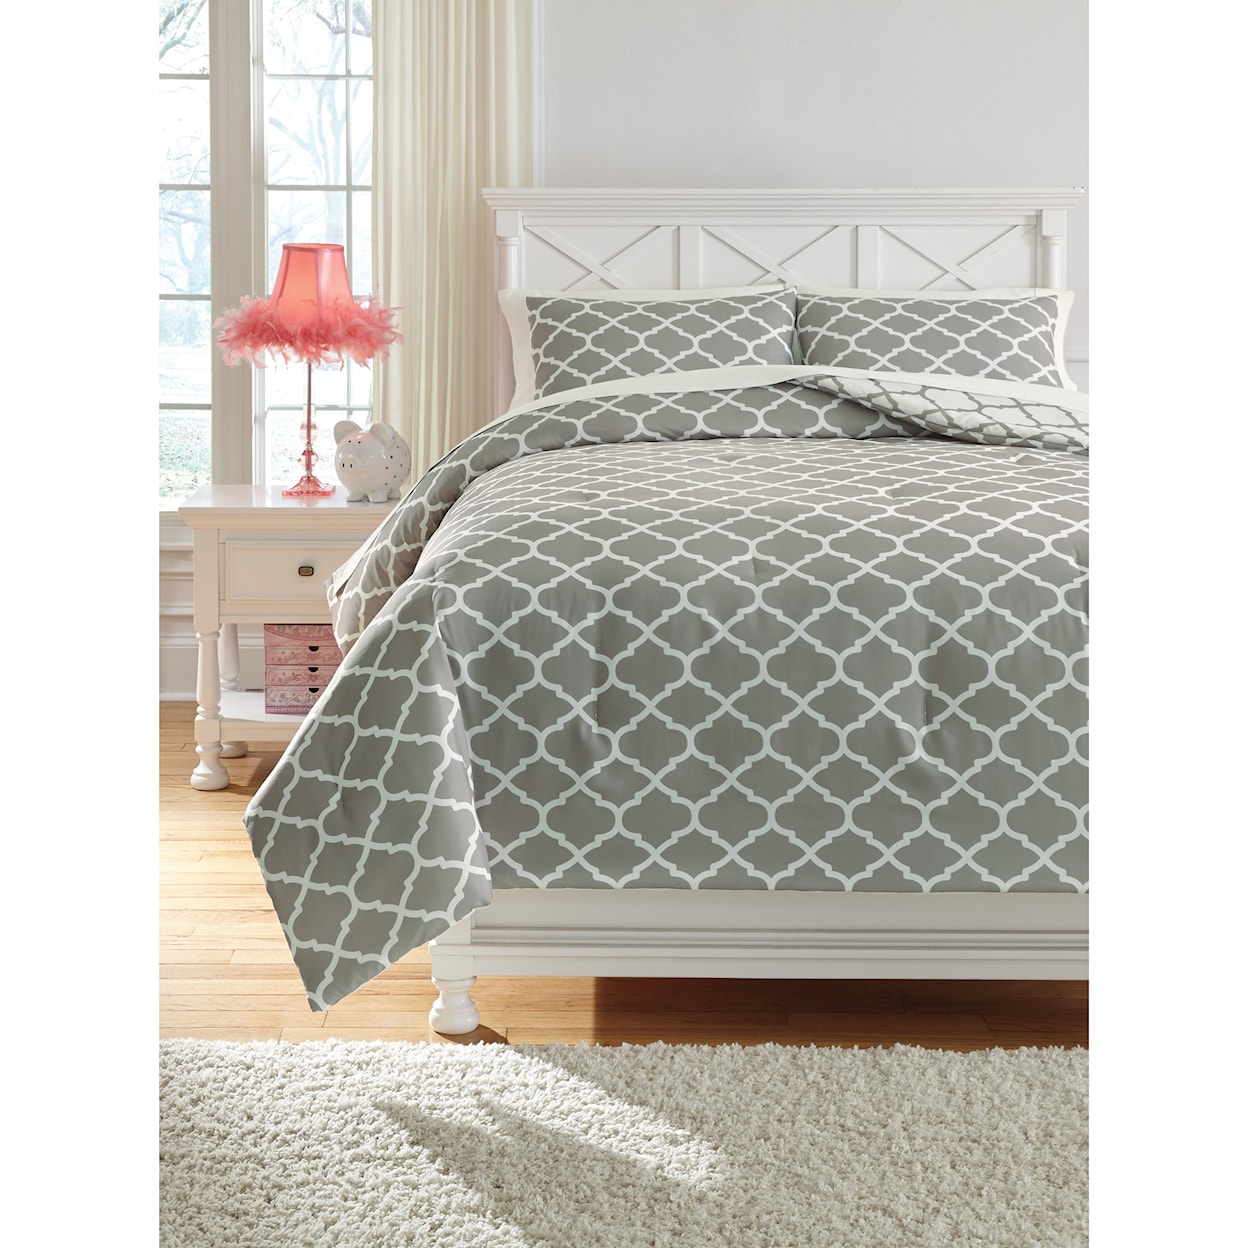 Ashley Furniture Signature Design Bedding Sets Full Media Gray/White Comforter Set